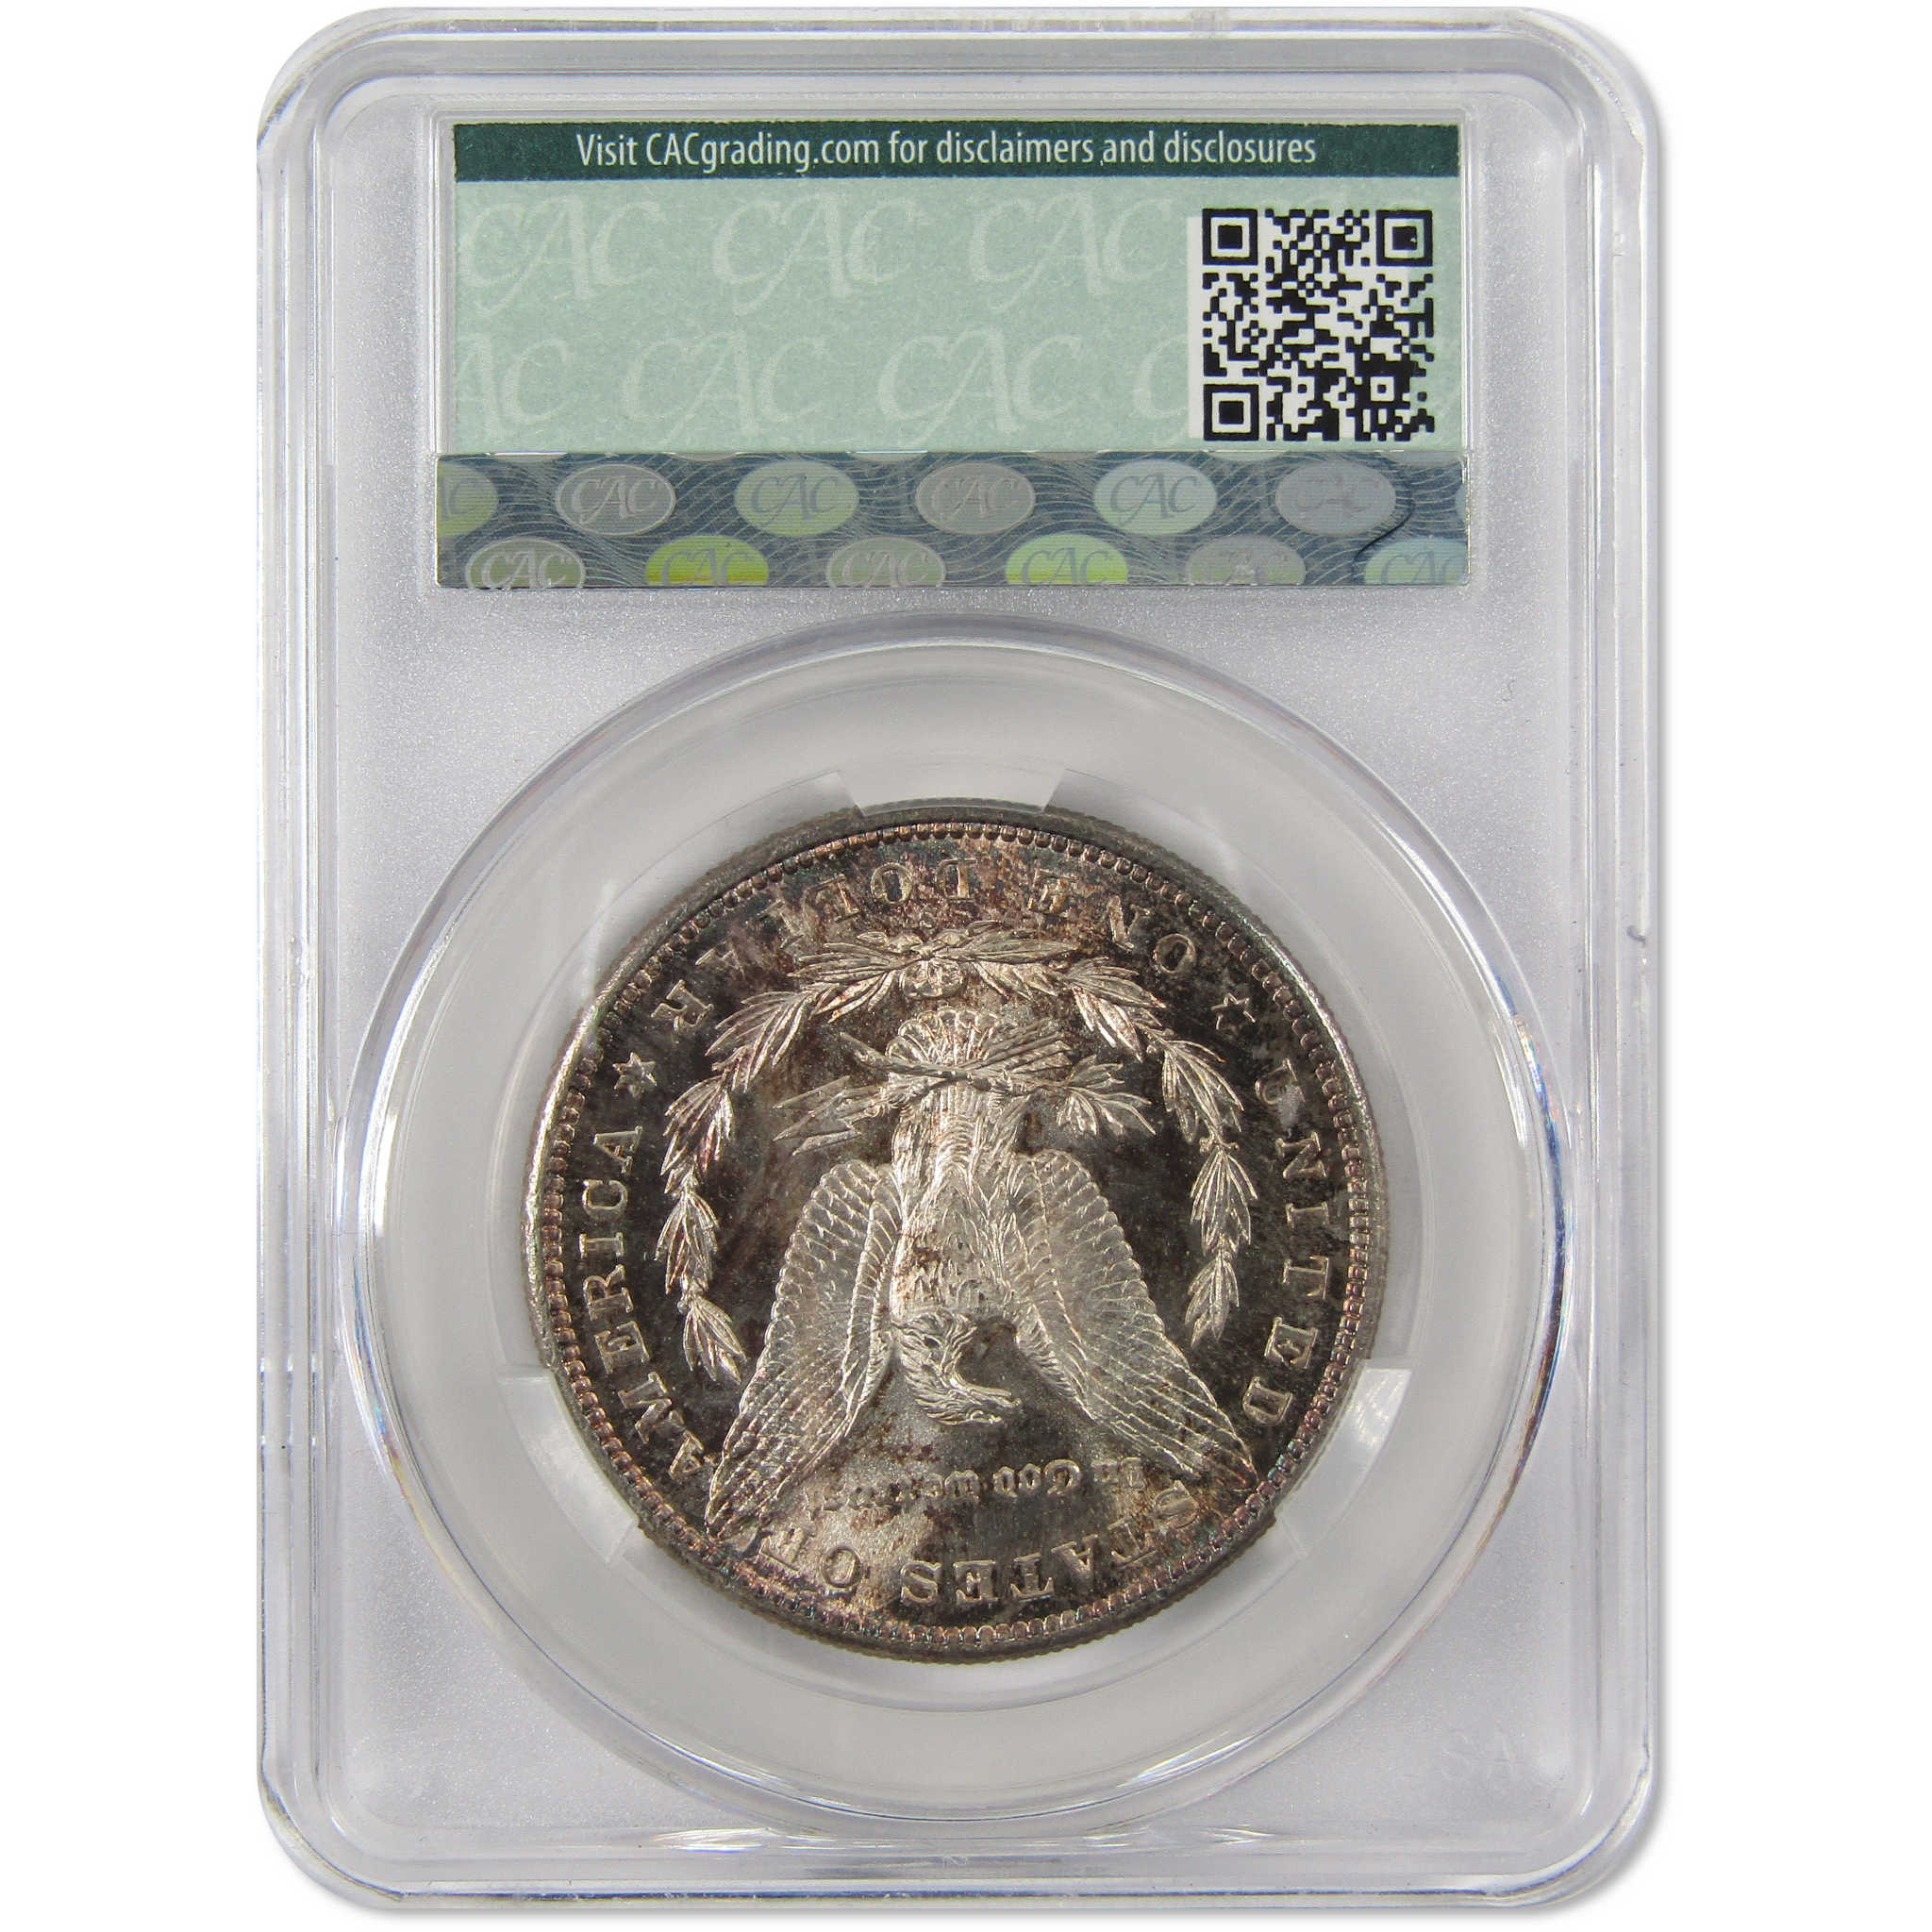 1881 S Morgan Dollar MS 64 CAC 90% Silver $1 Coin SKU:I9744 - Morgan coin - Morgan silver dollar - Morgan silver dollar for sale - Profile Coins &amp; Collectibles